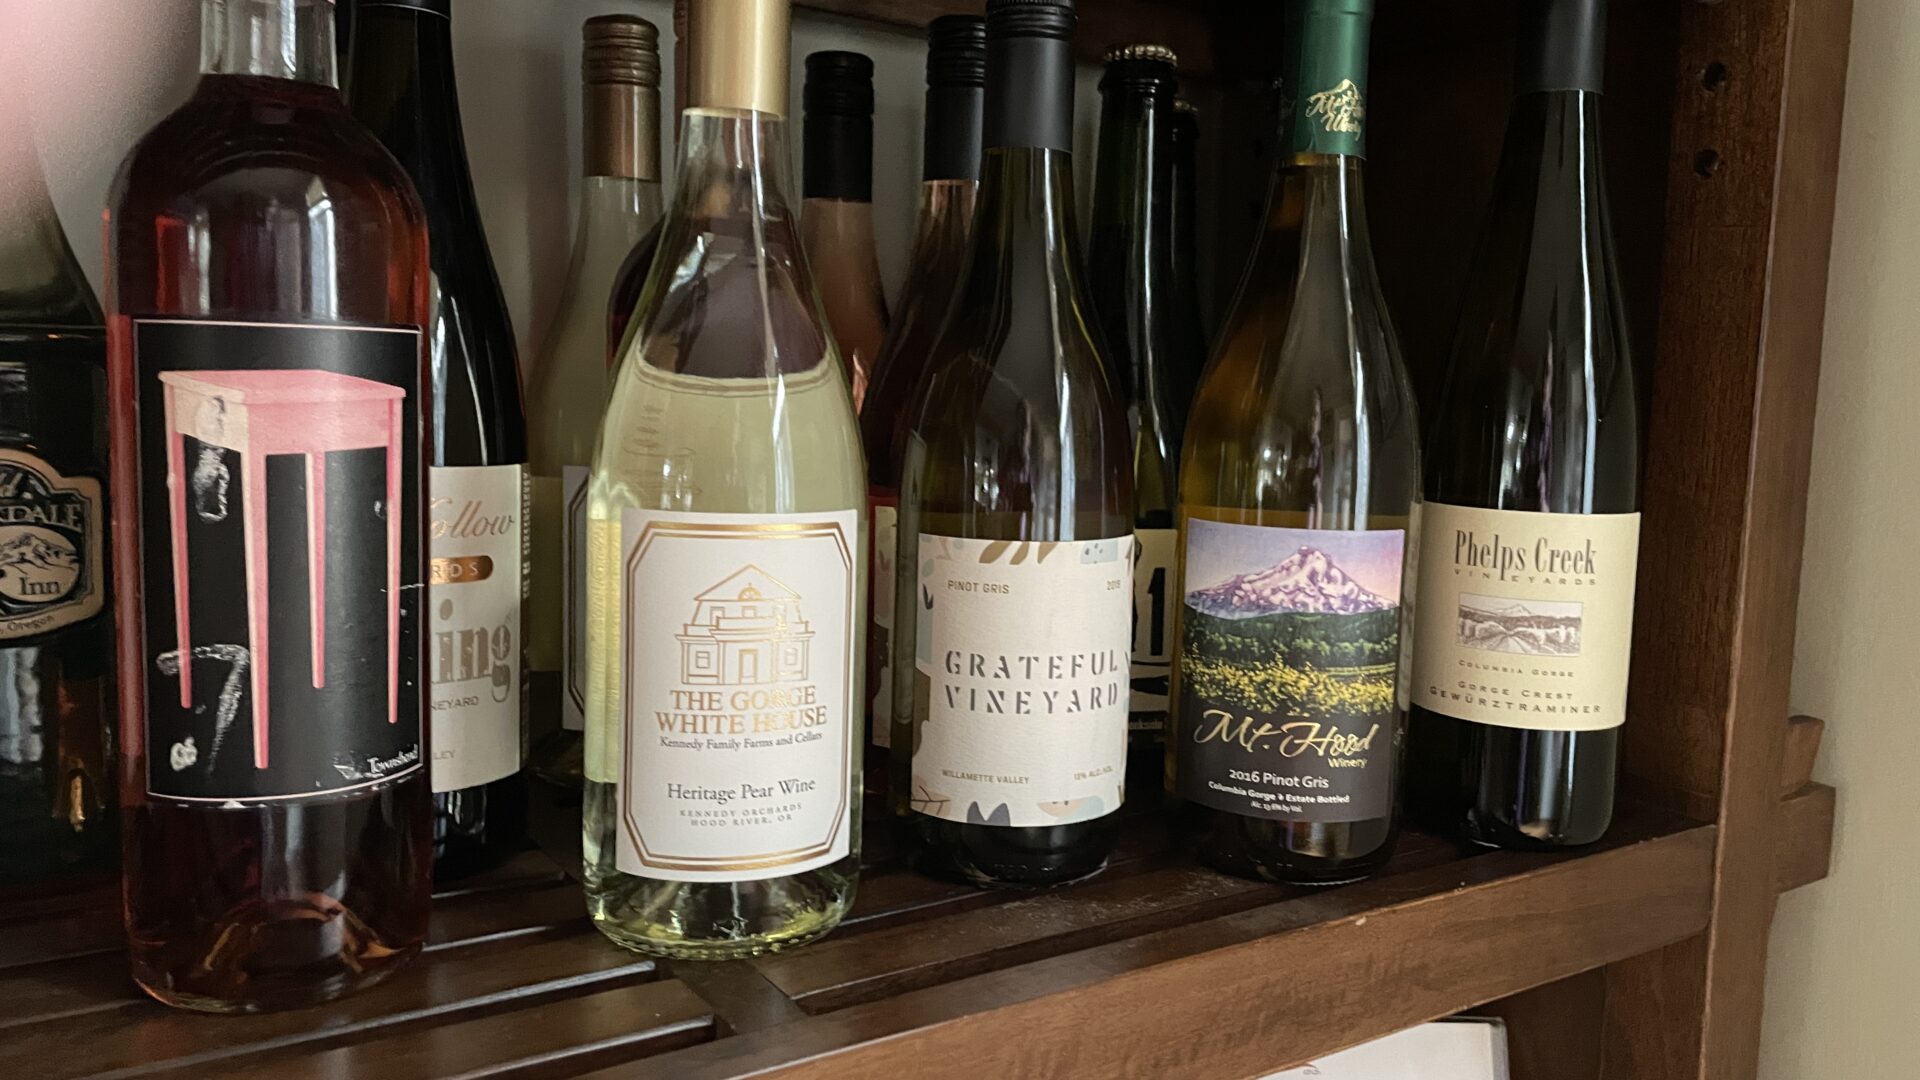 Hood River Valley Wines